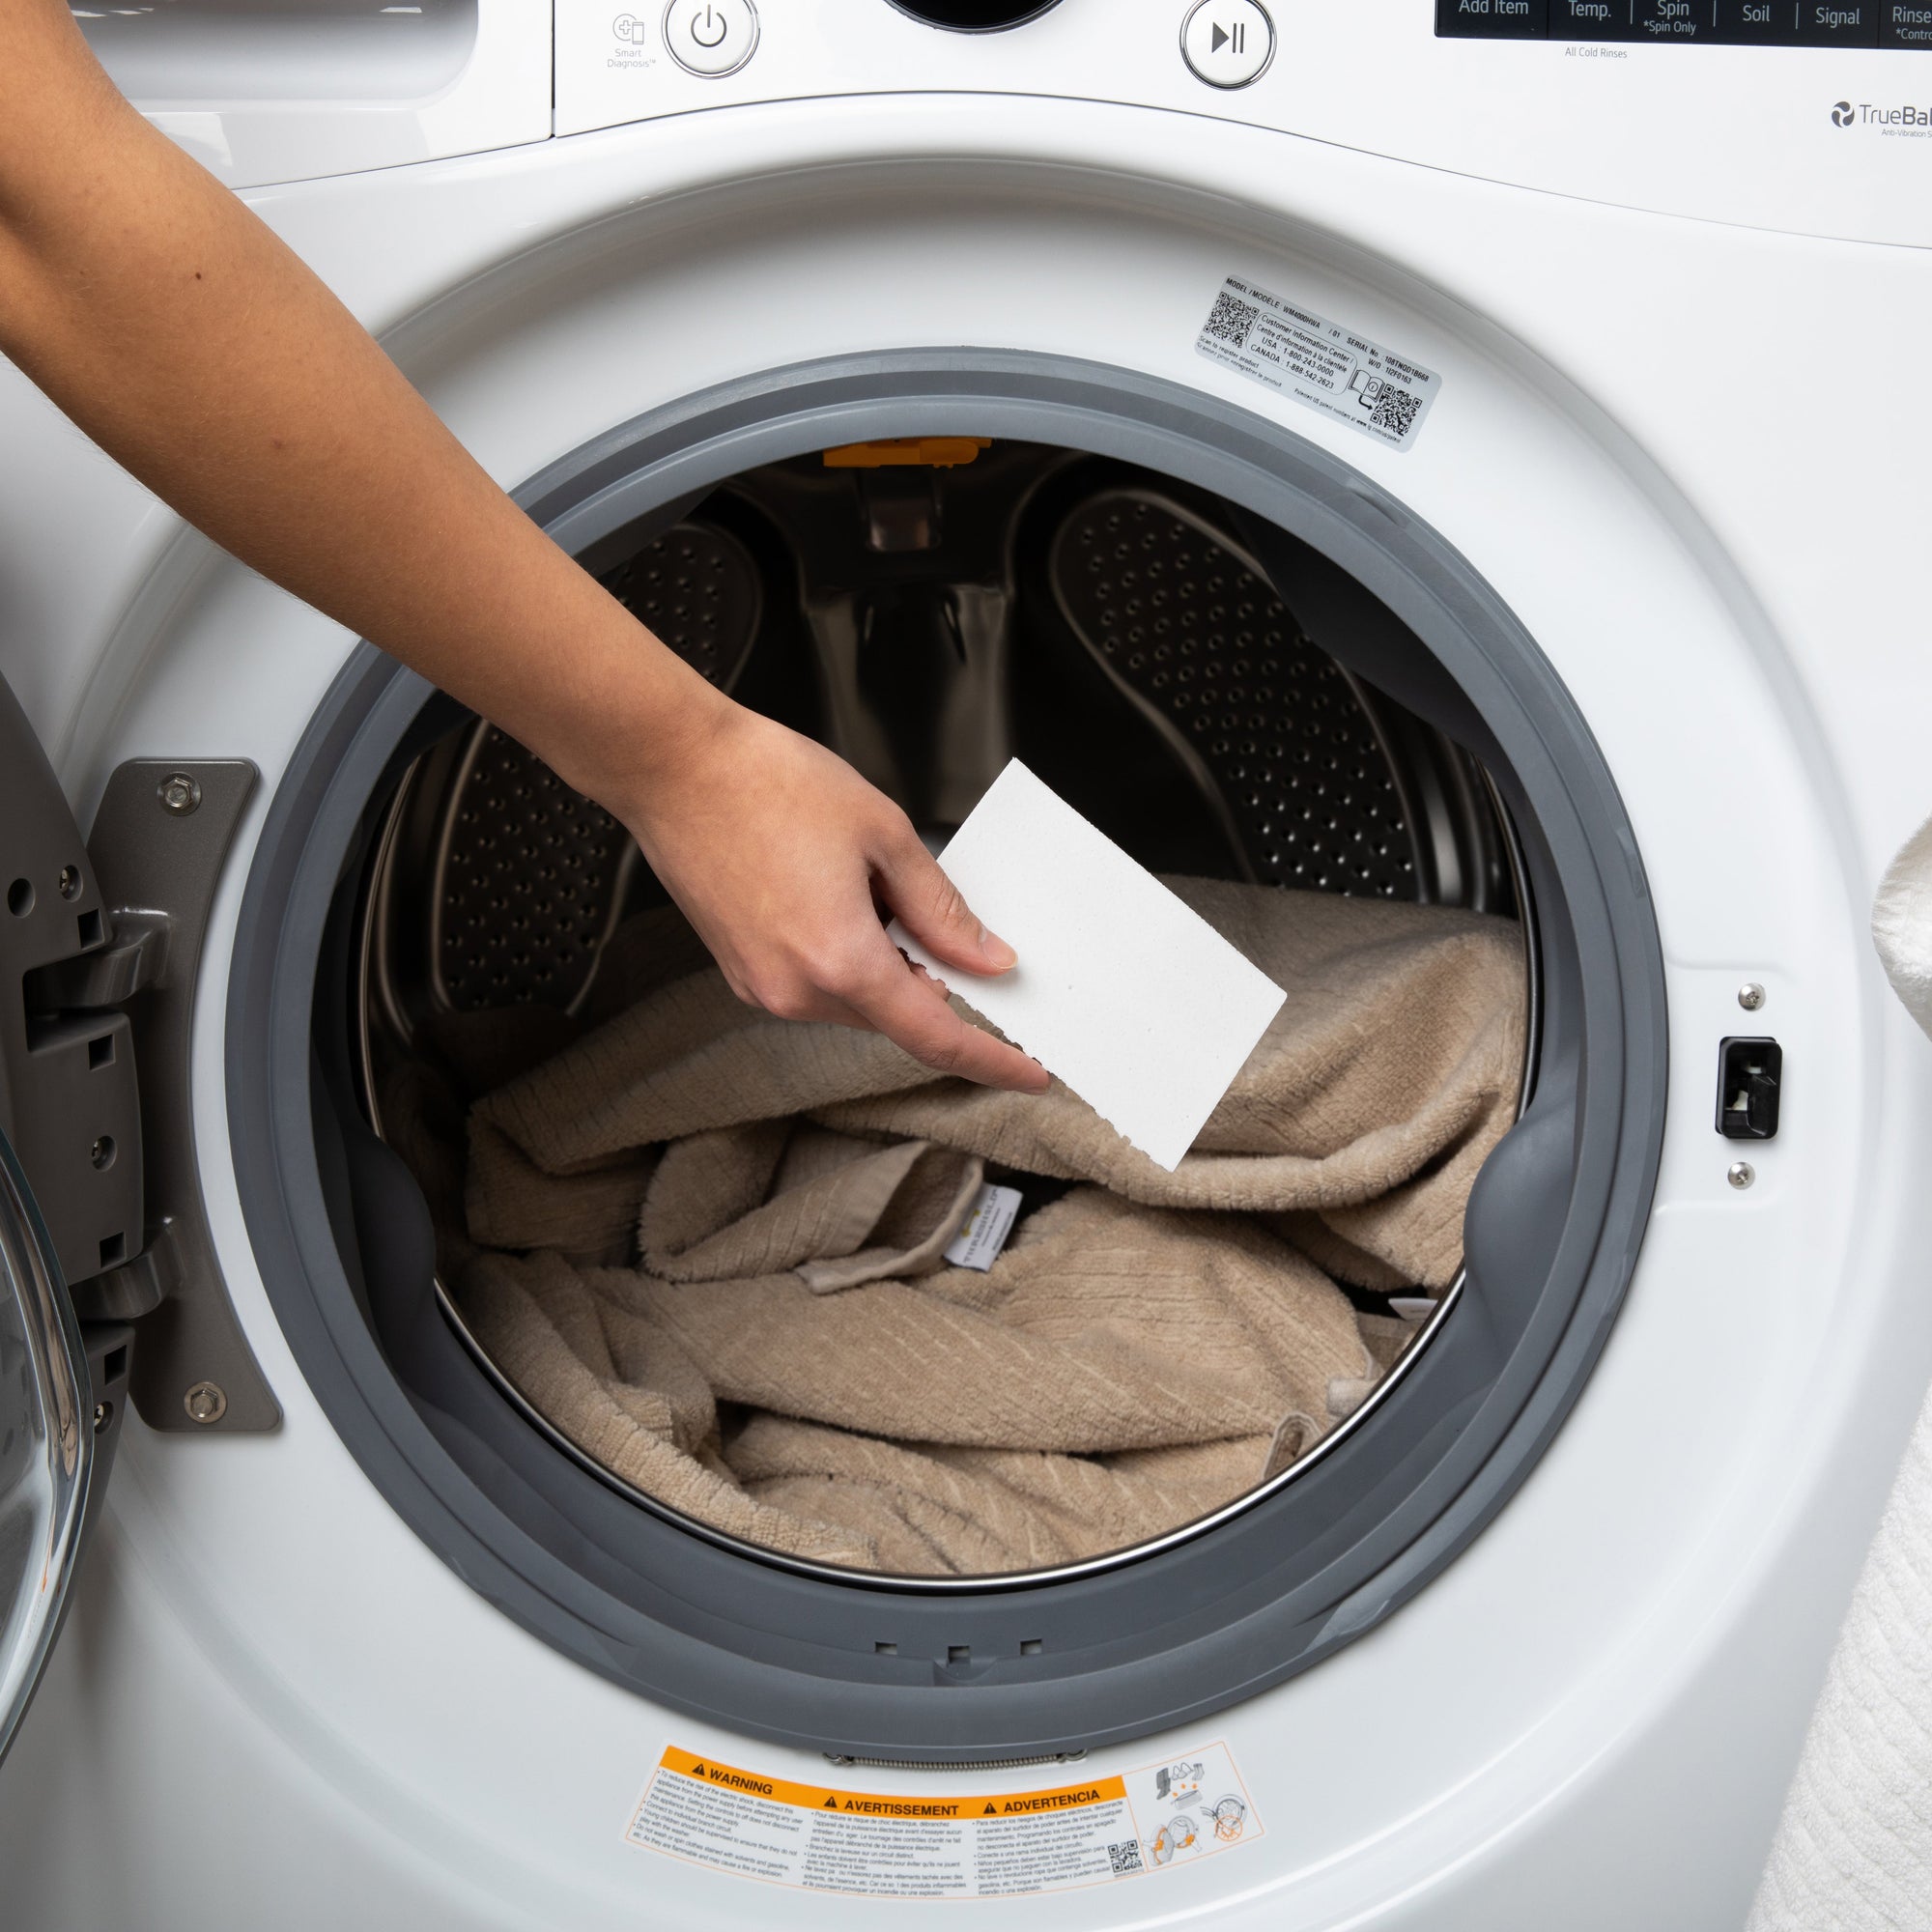 Toss & Go Laundry Detergent Sheets (60-120 Loads)